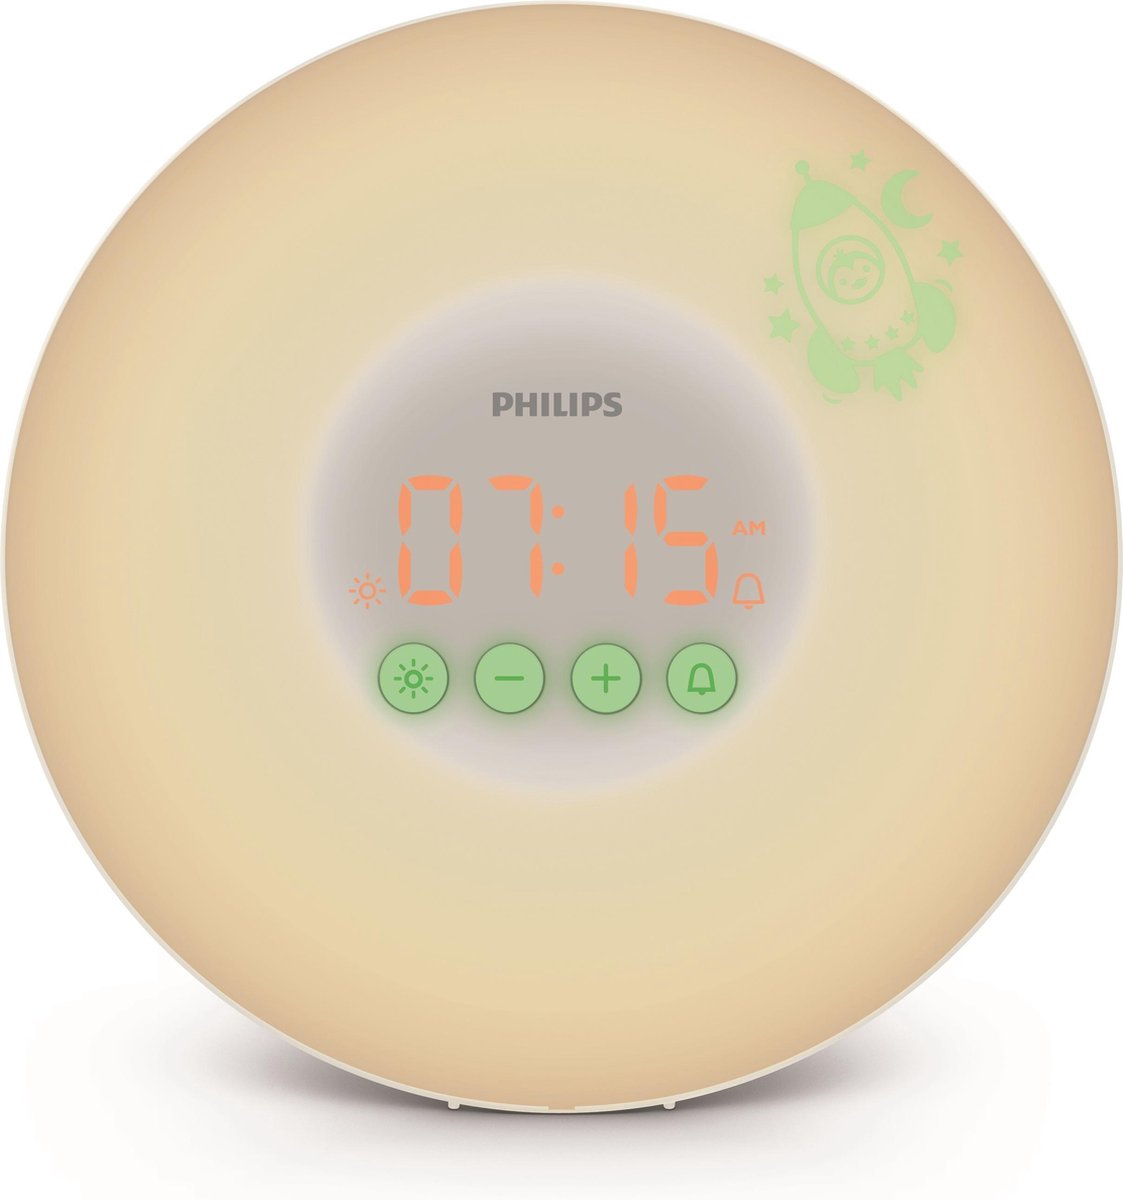 Philips HF3503/01 - Wake-up Light for kids | bol.com